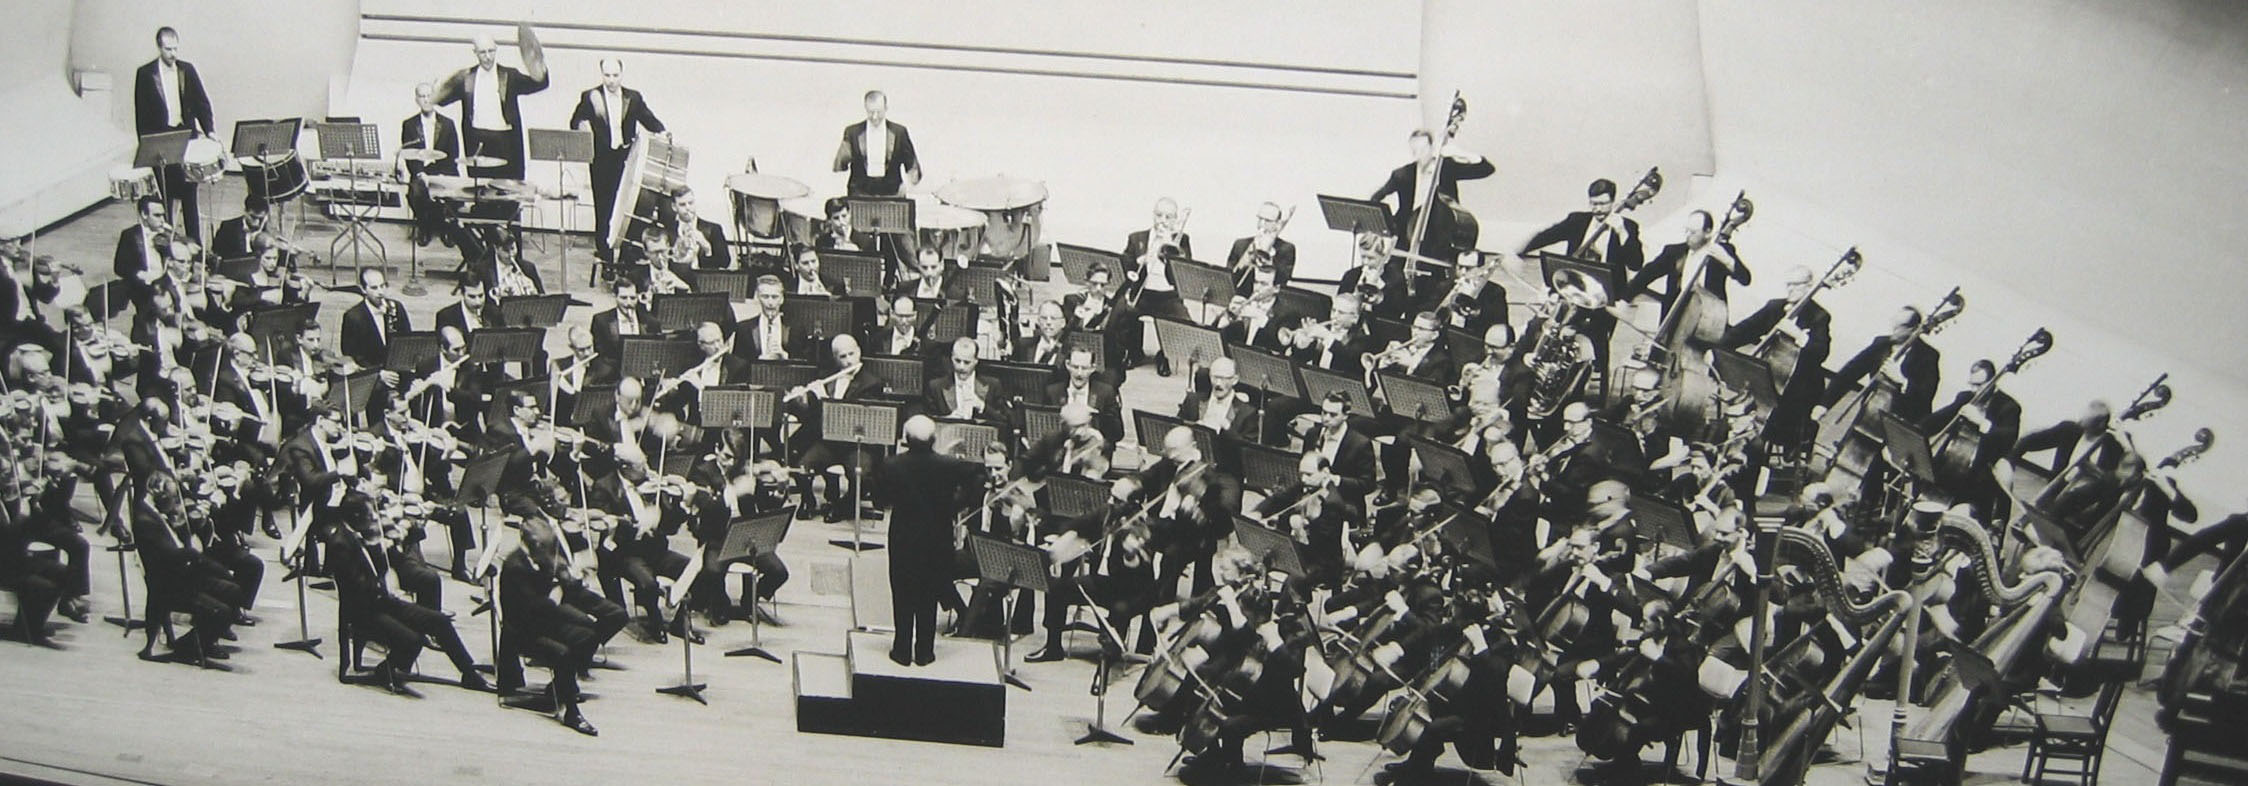 Philadelphia Orchestra in Tokyo, 1967, edited